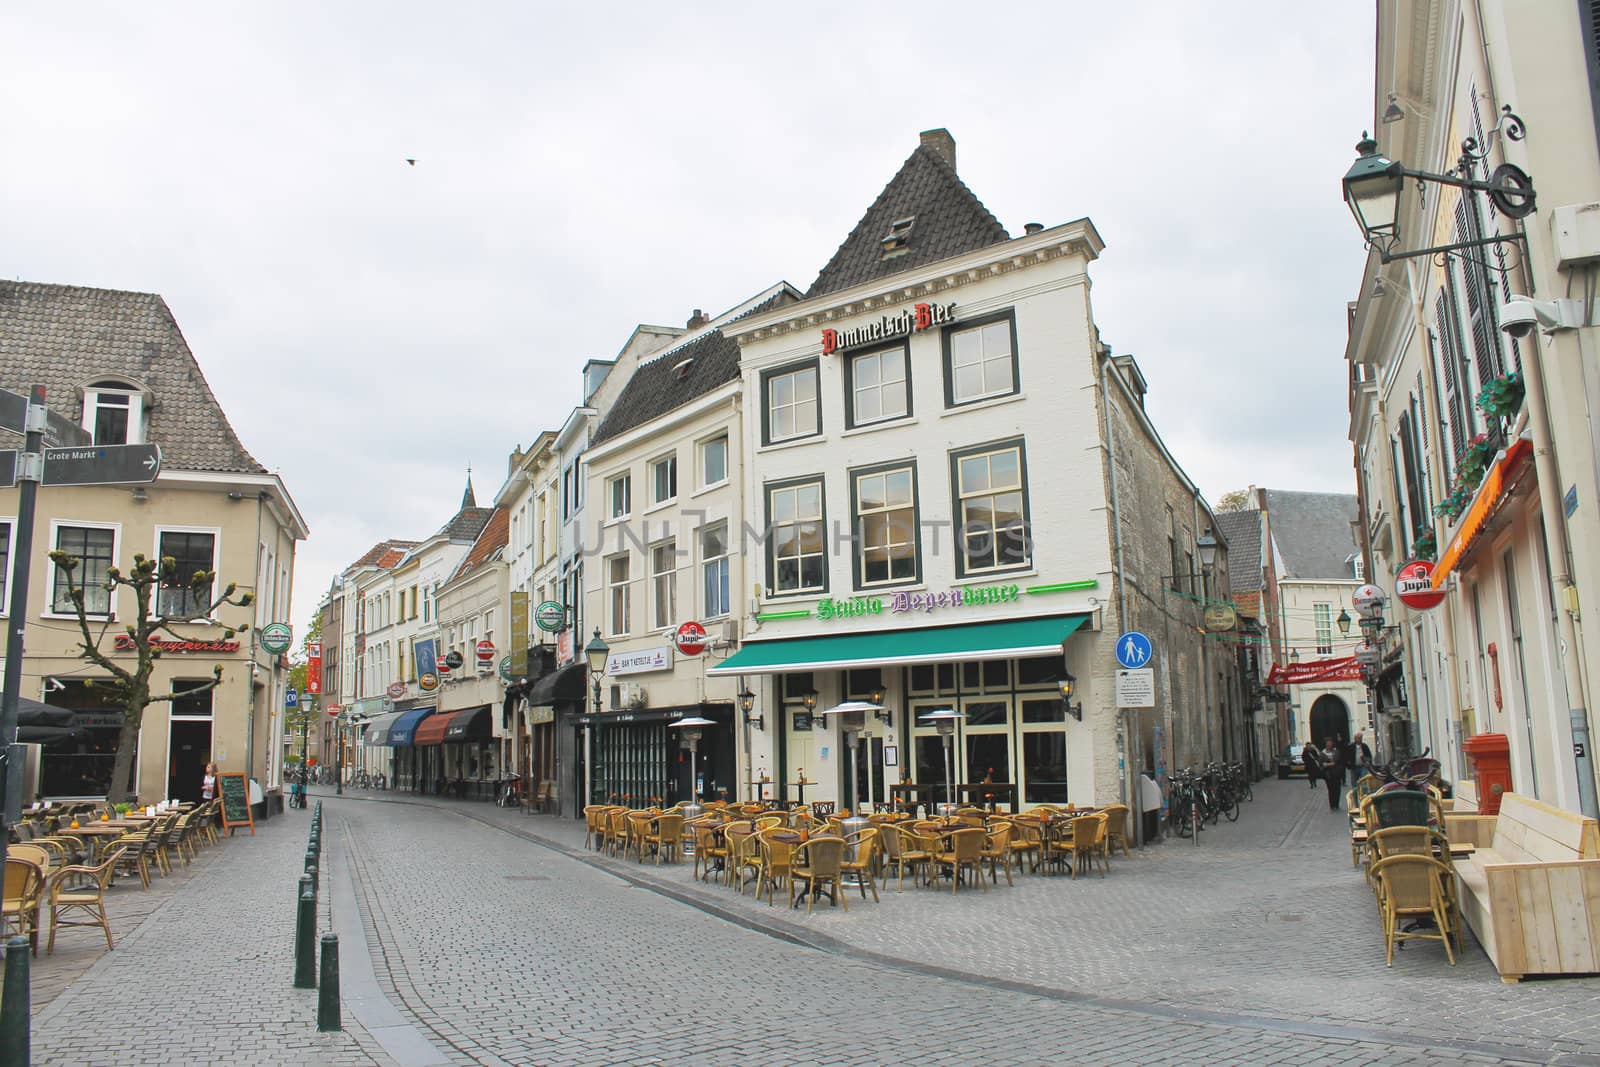 Street cafe in the Dutch city of Breda. Netherlands by NickNick